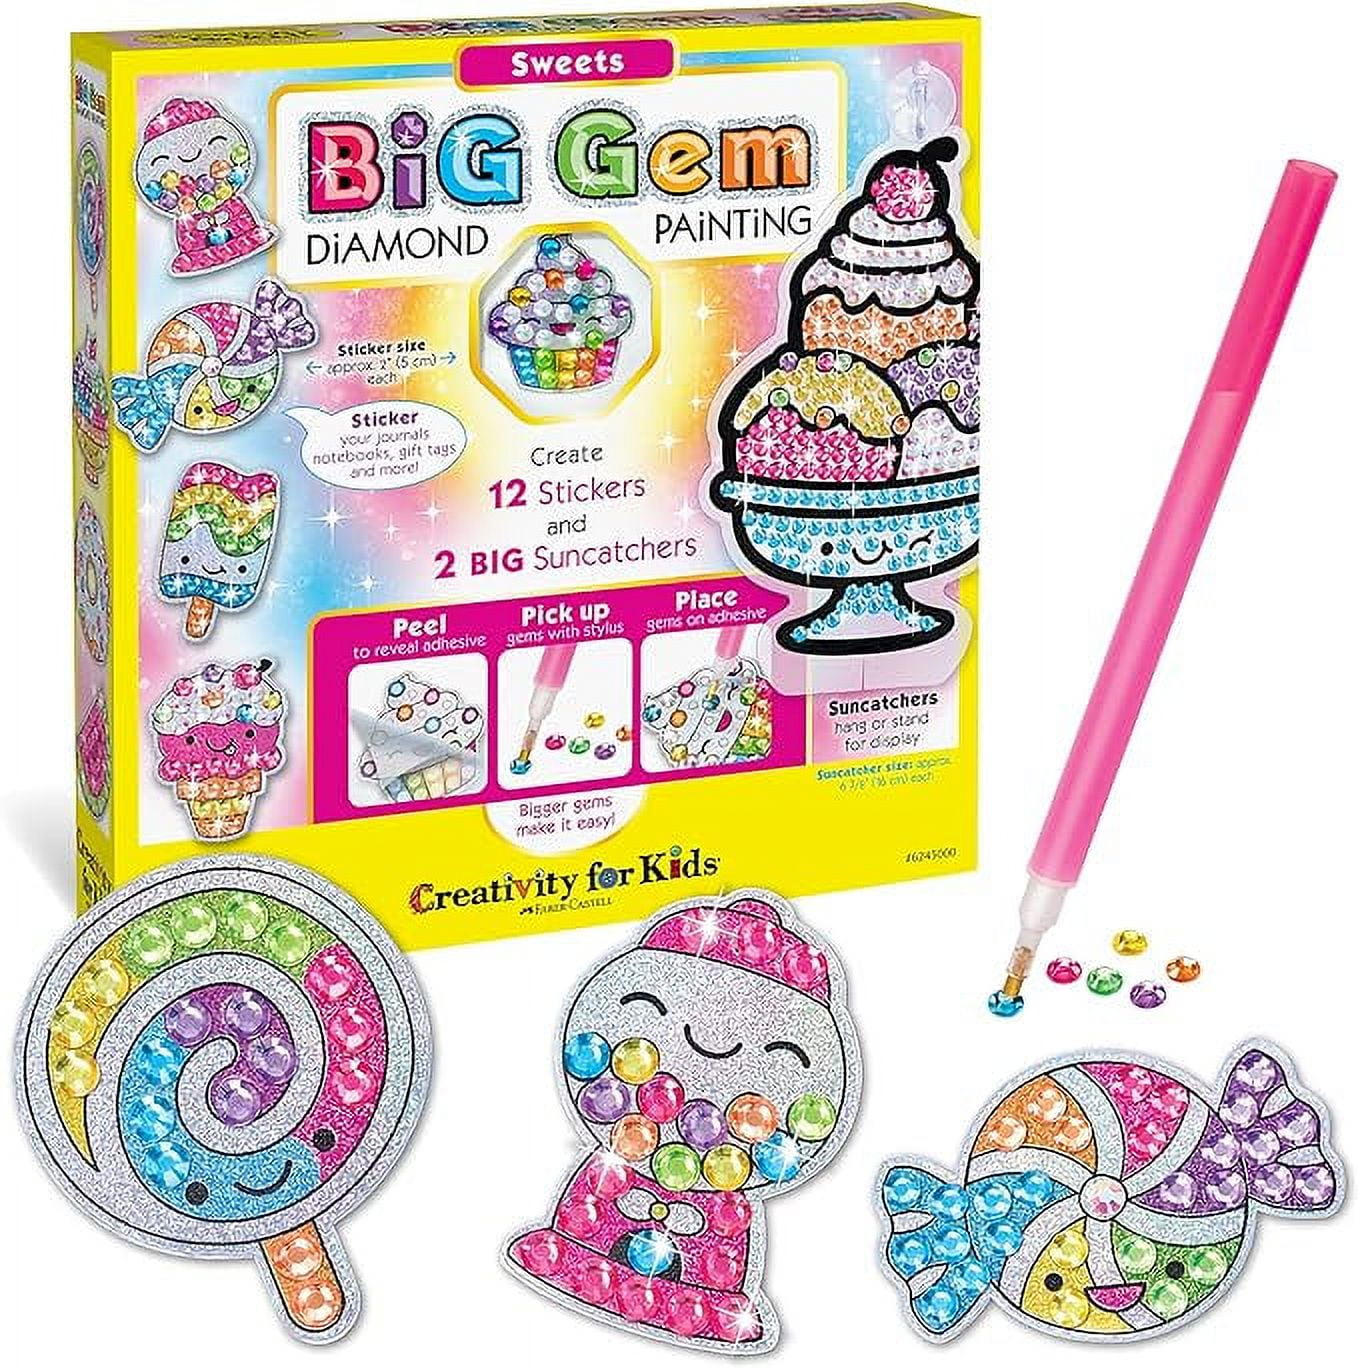 SJENERT Children Big Gem Diamond Painting Kit Create Your Own Stickers  Creativity Mermaid Unicorn Diamond Craft Kids Girls Toys Gifts(TH4) 